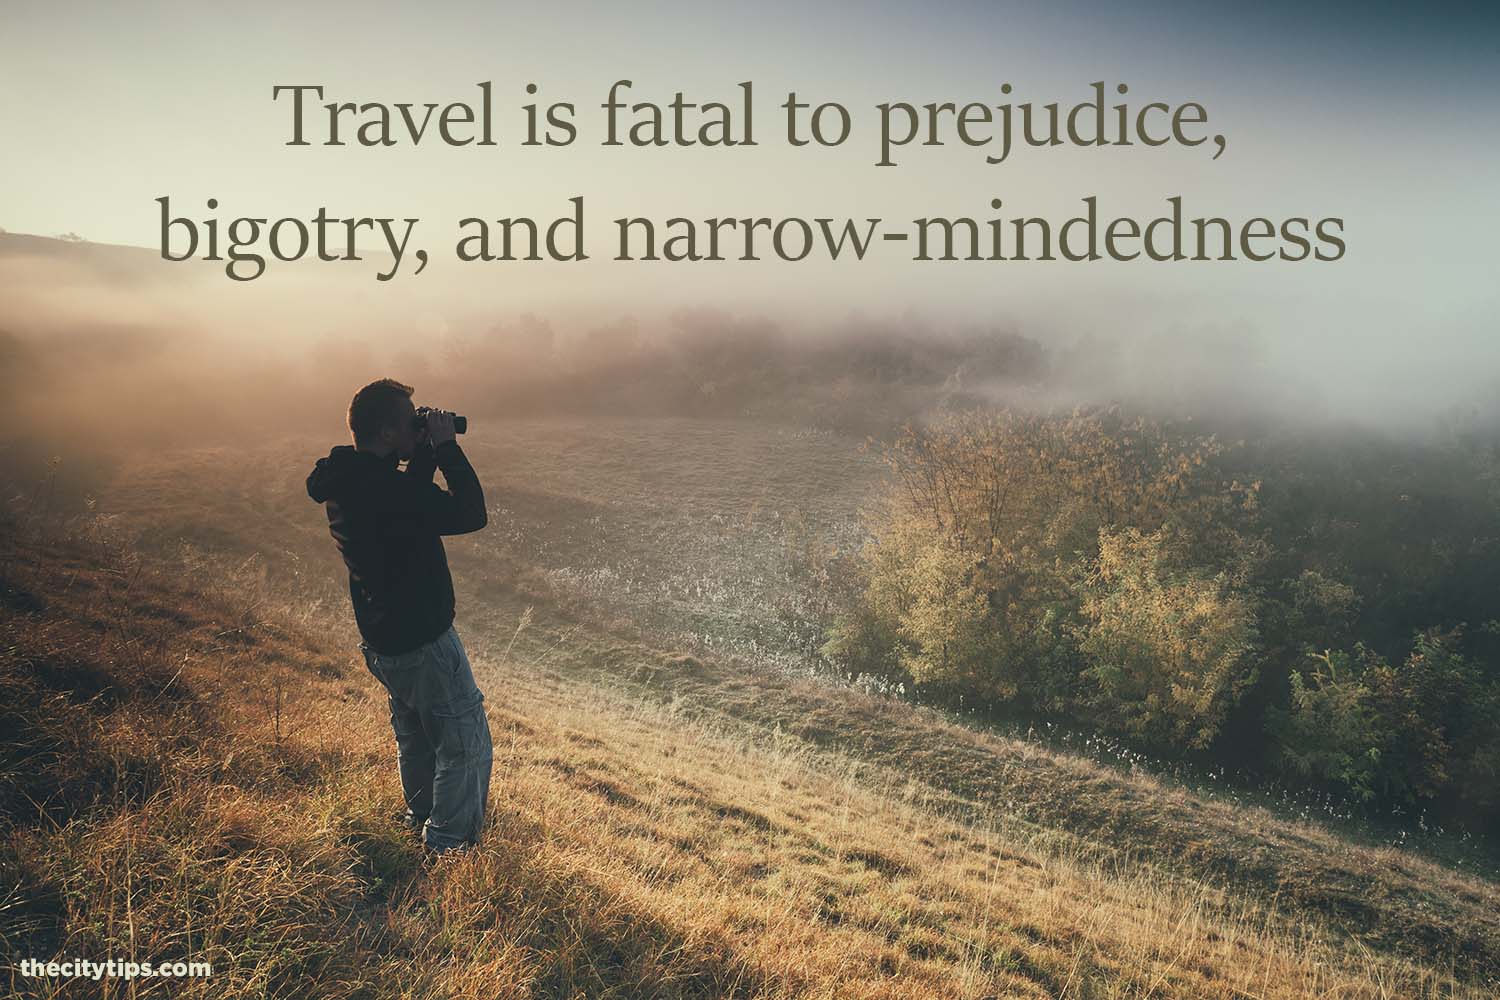 "Travel is fatal to prejudice, bigotry, and narrow-mindedness." by Mark Twain